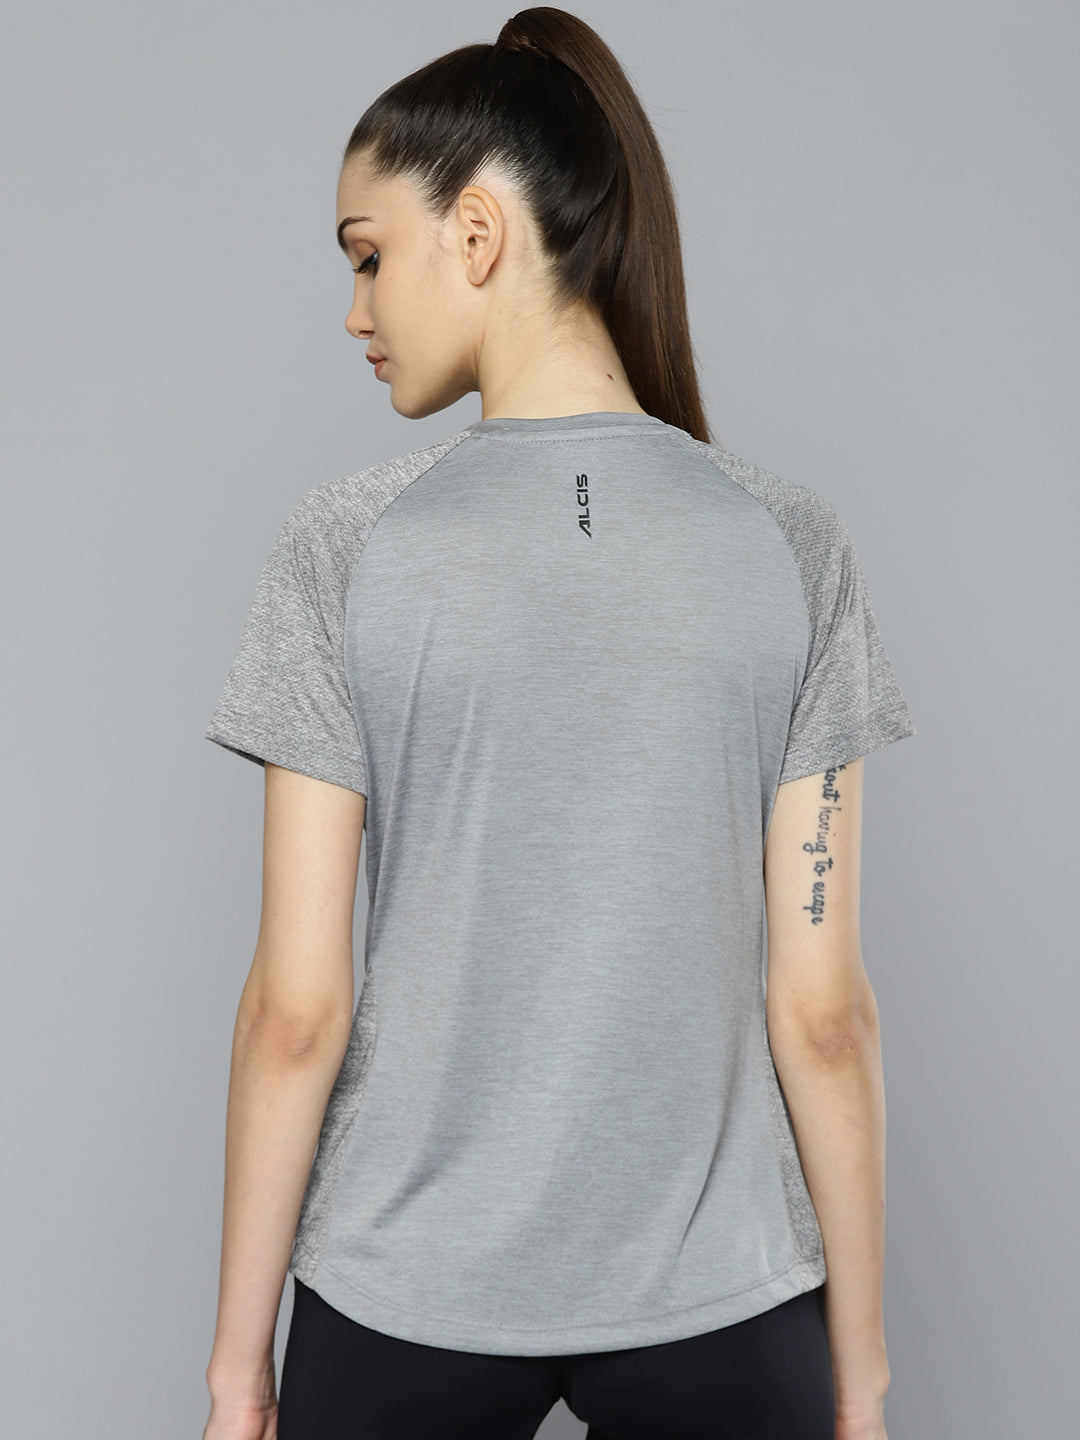 Alcis Women Grey Printed T-shirt